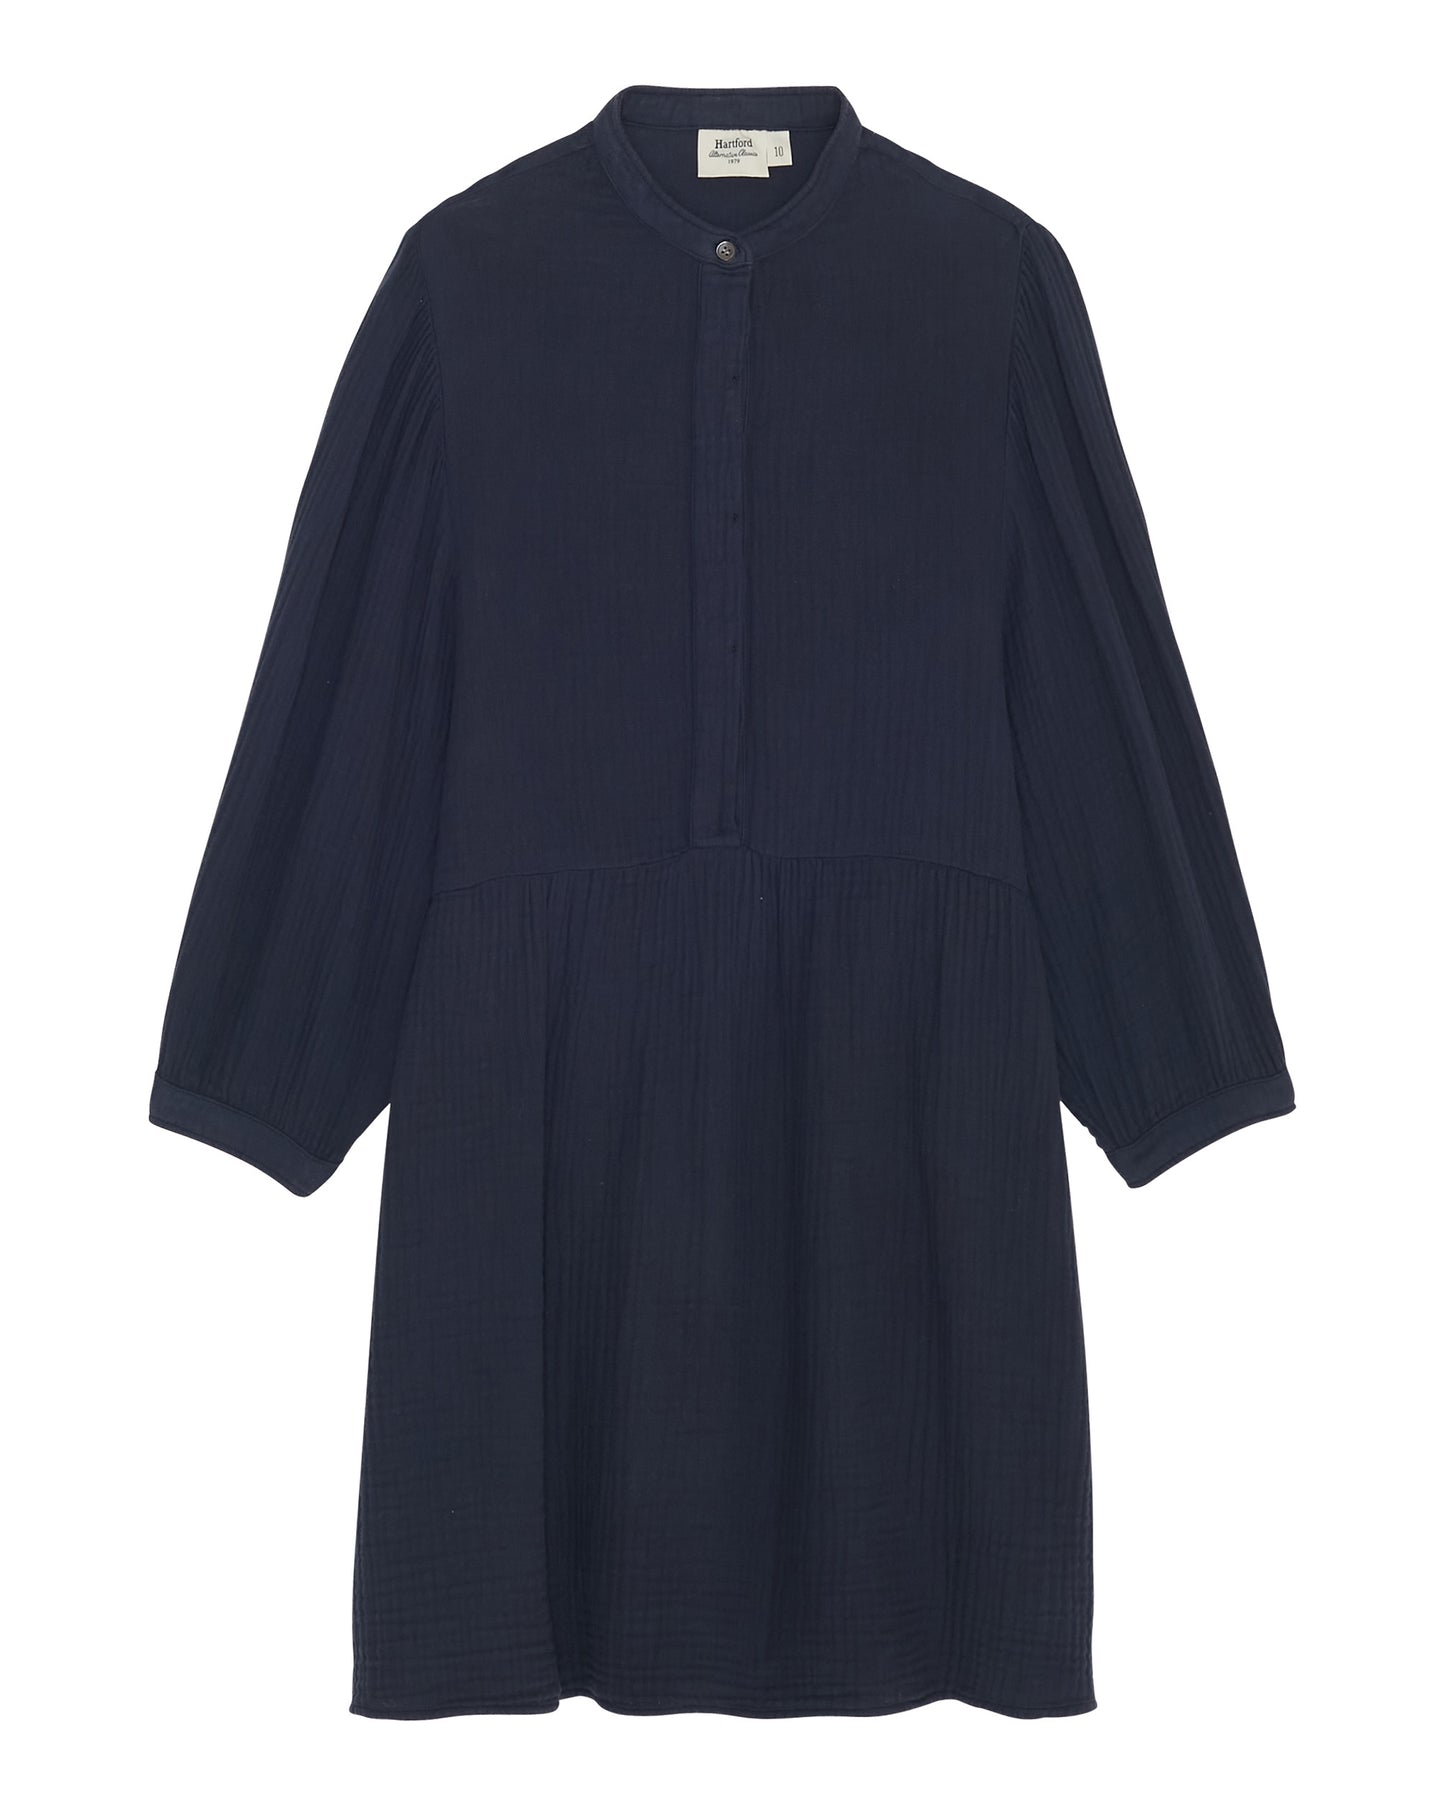 Revita Girls' Navy Blue Double Cotton Gauze Dress